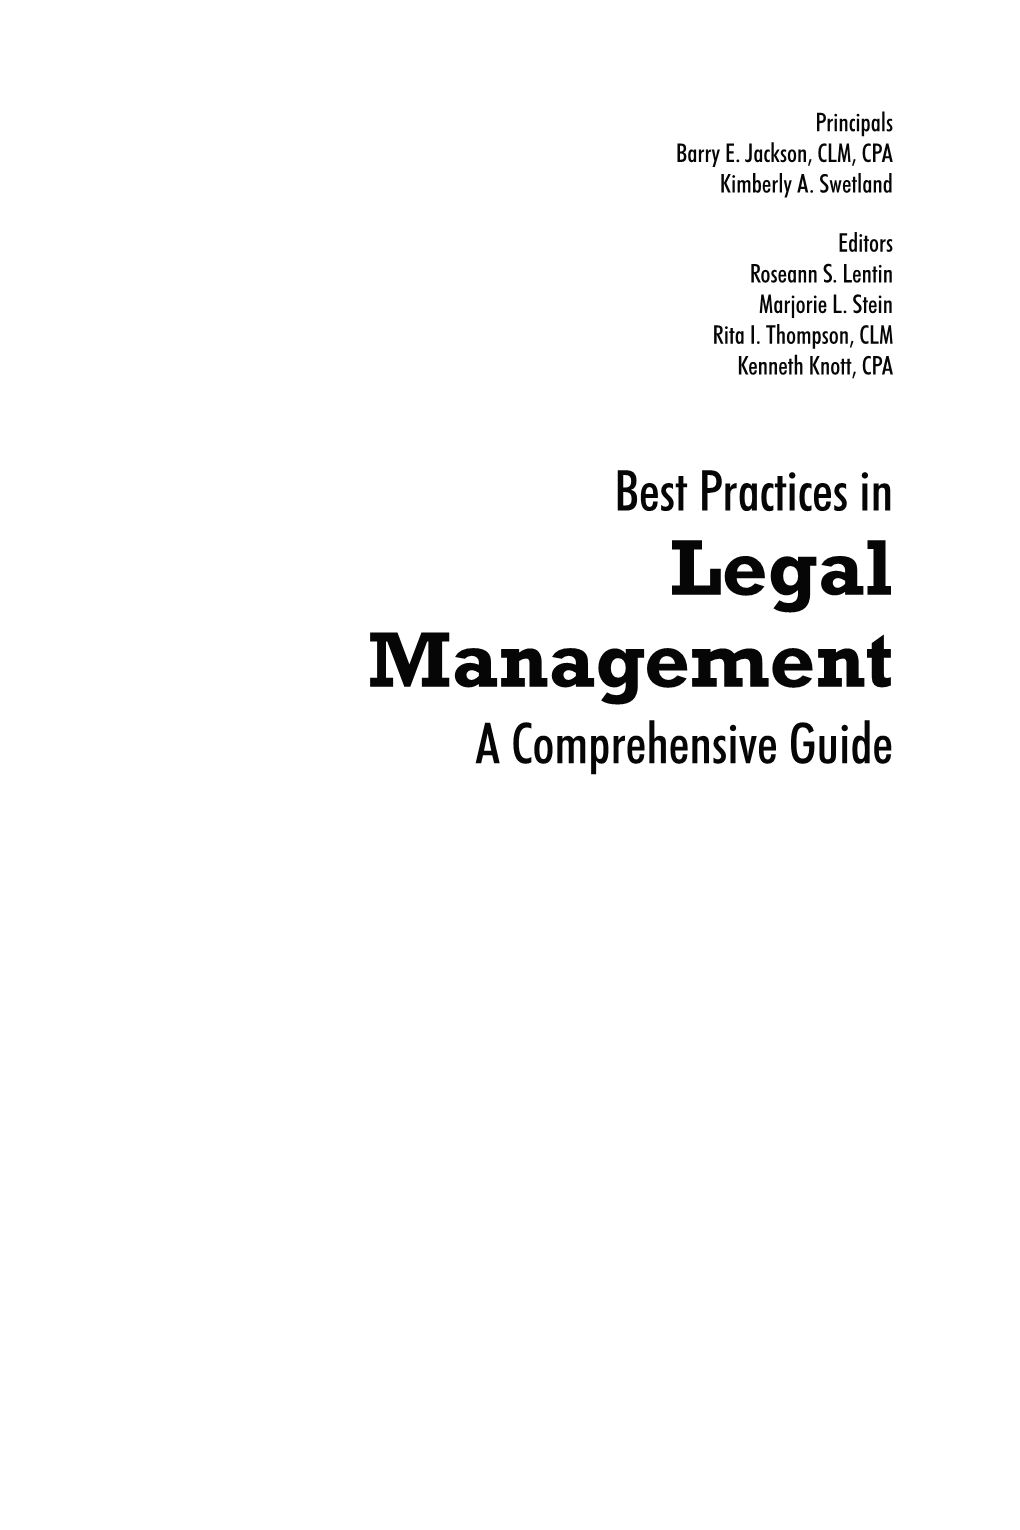 Best Practices in Legal Management